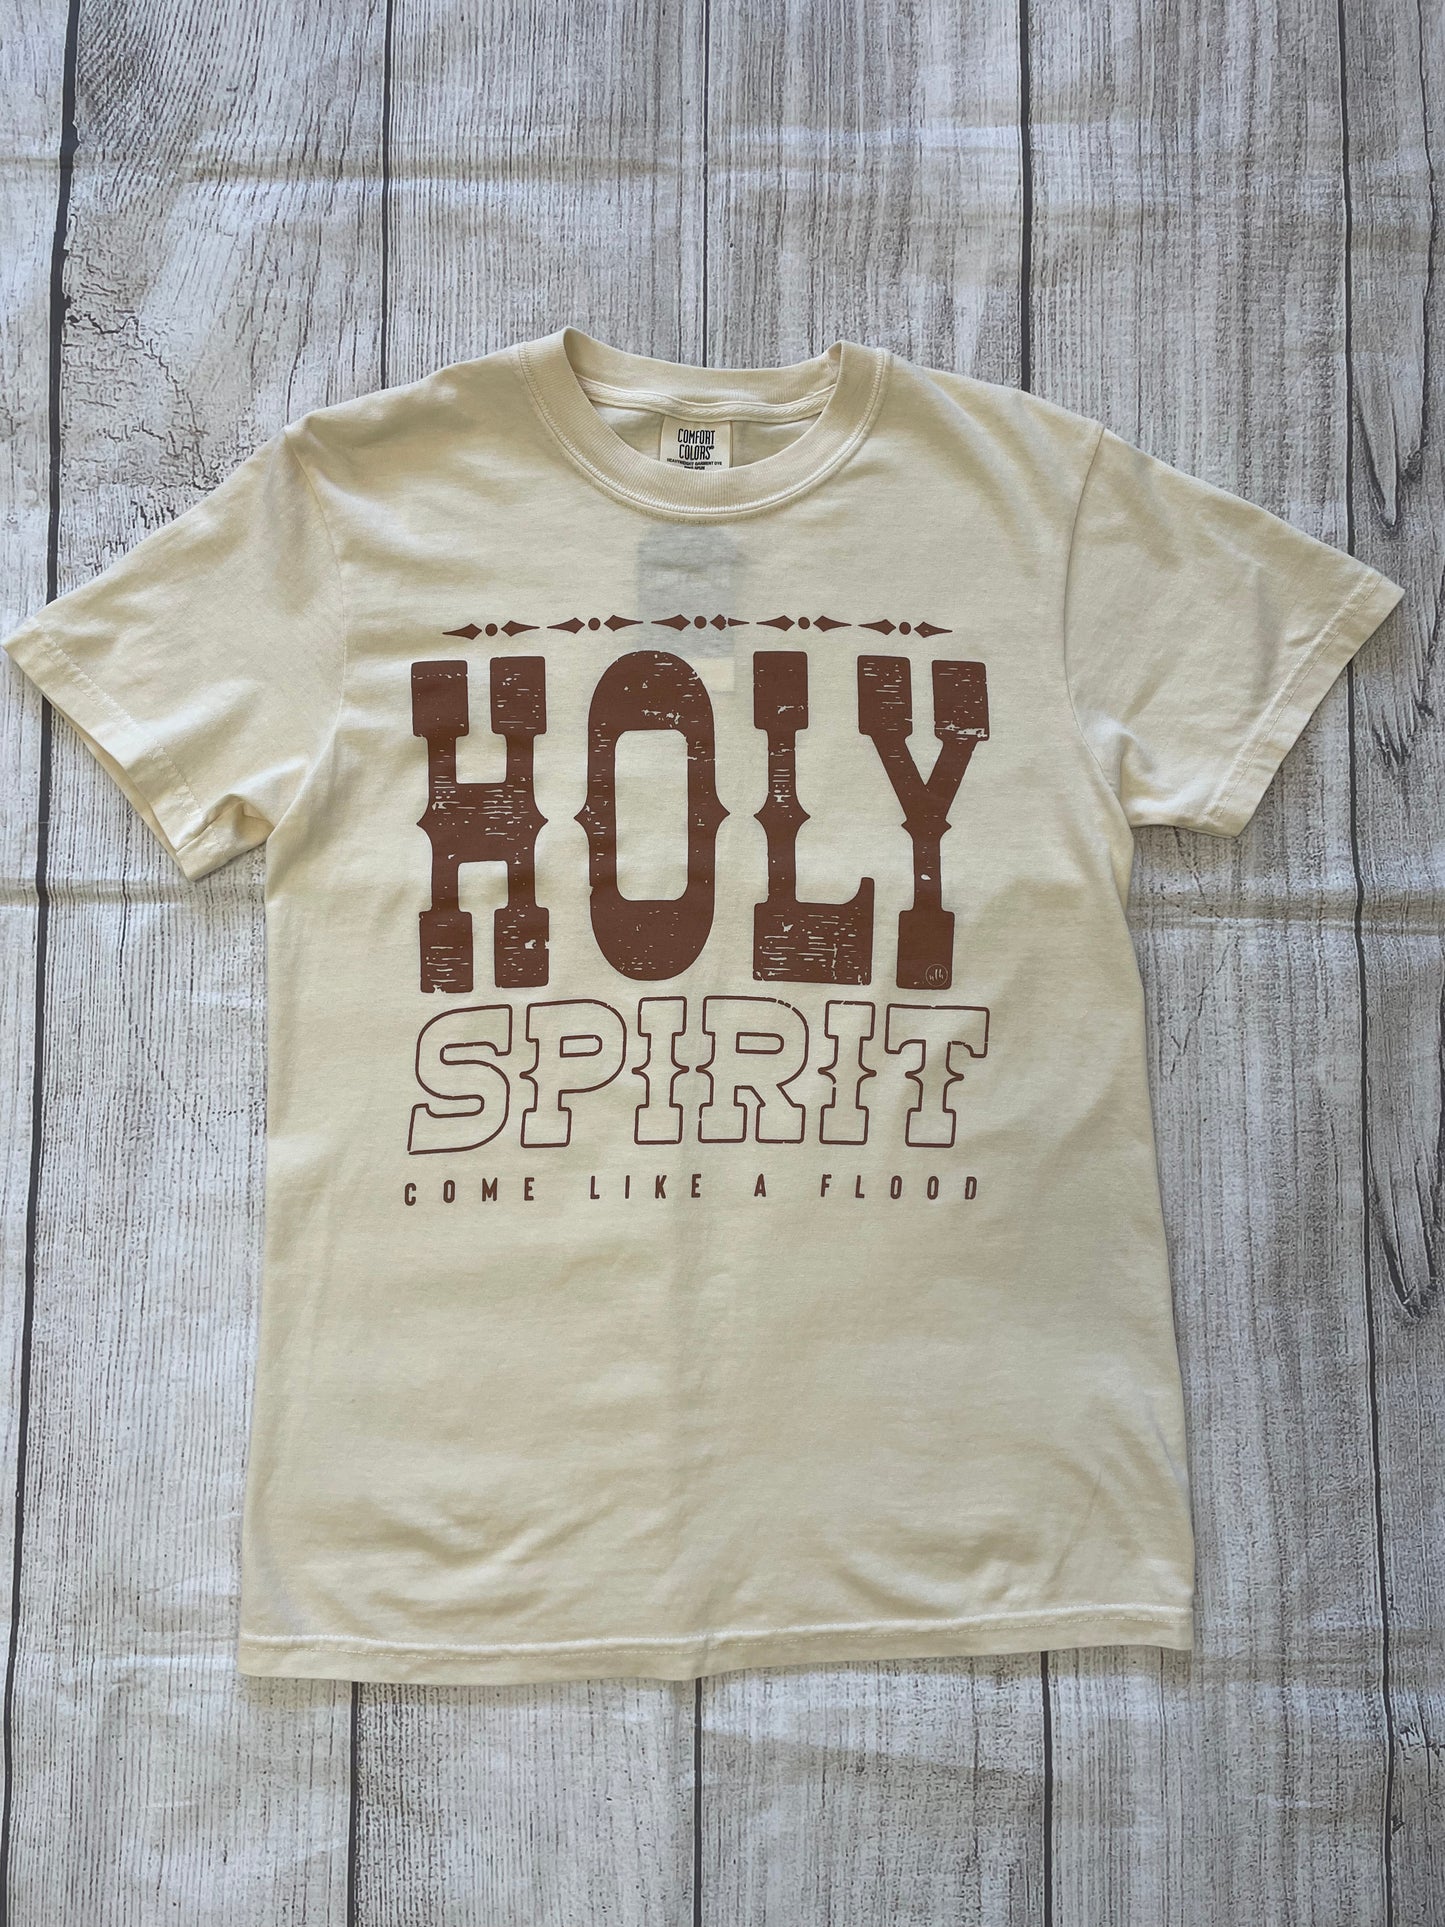 NLH Holy Spirit Tshirt